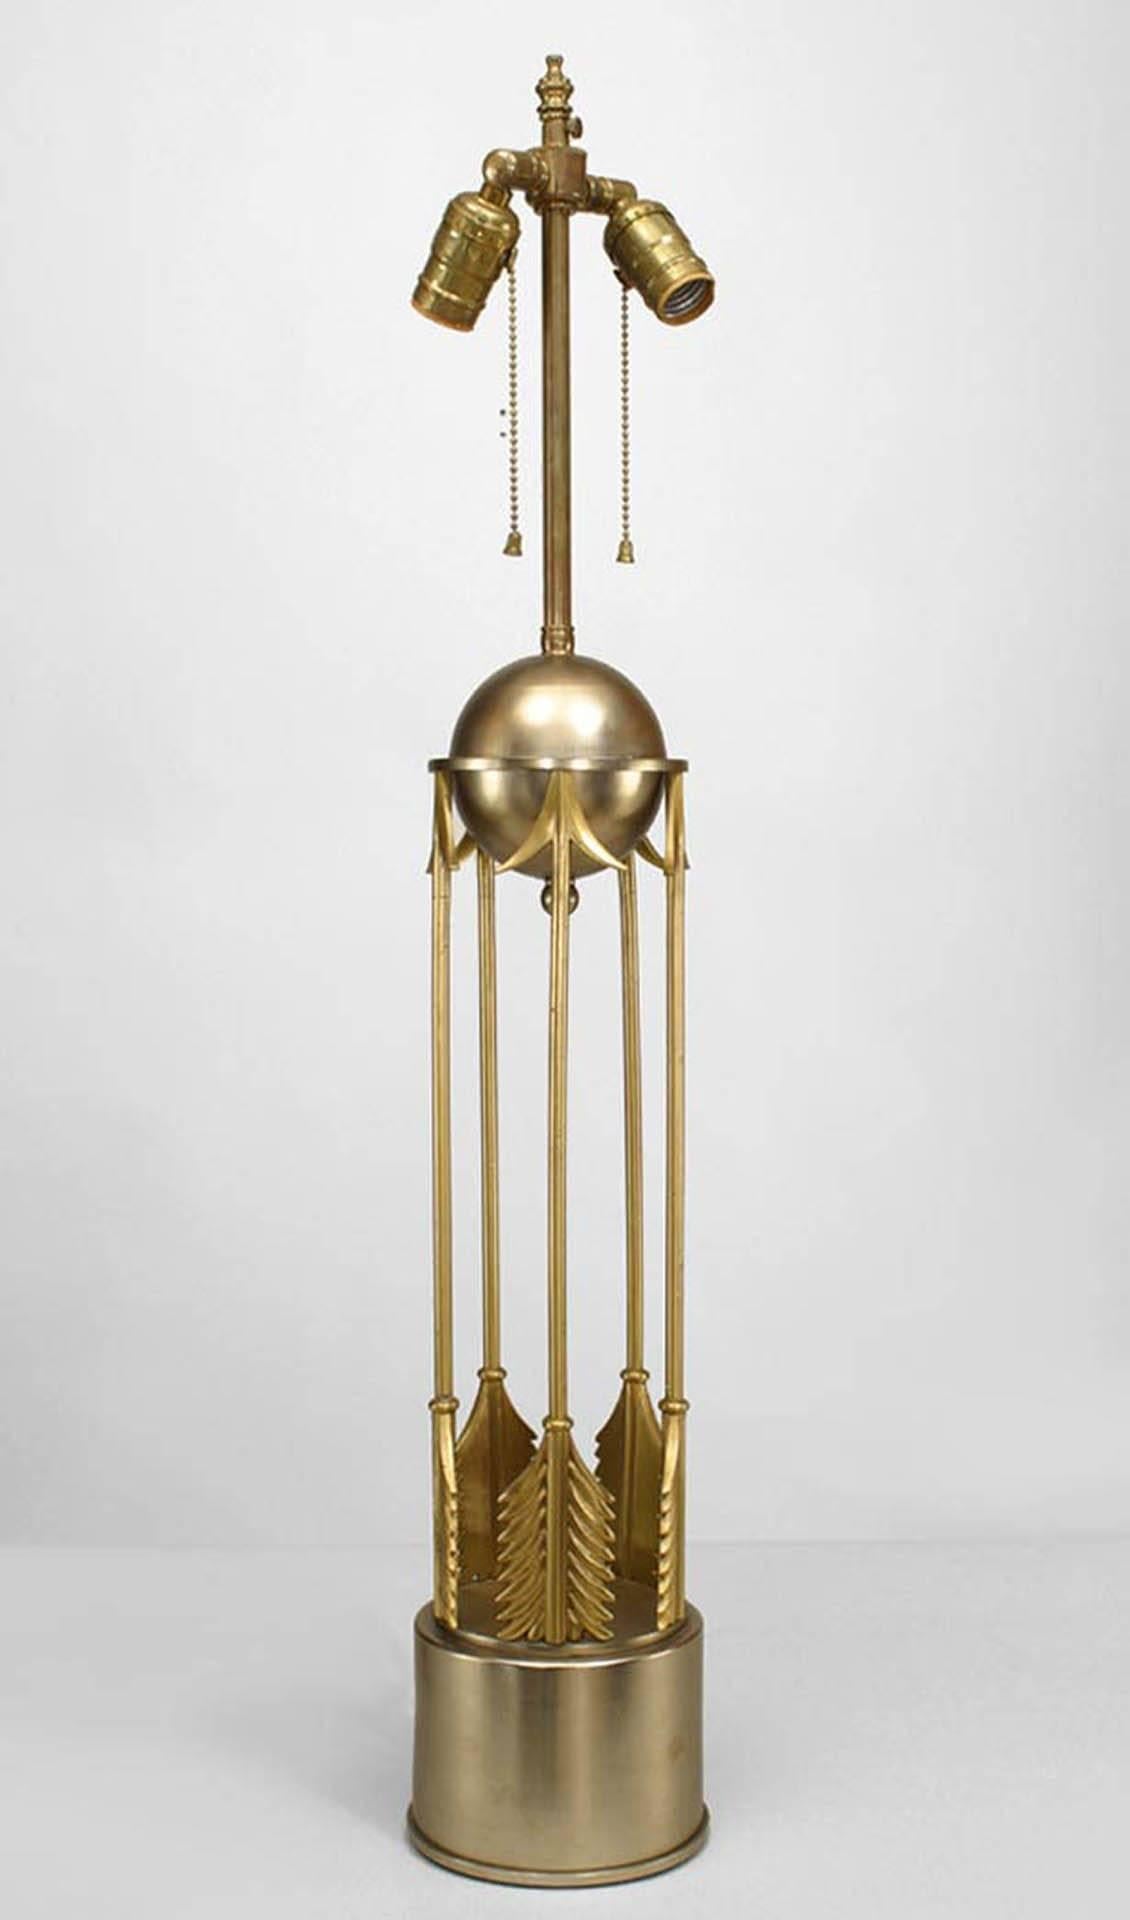 Pair of American Art Moderne 1950s steel and brass table lamps with arrow motif (att: T.H. ROBSJOHN GIBBINGS).
 